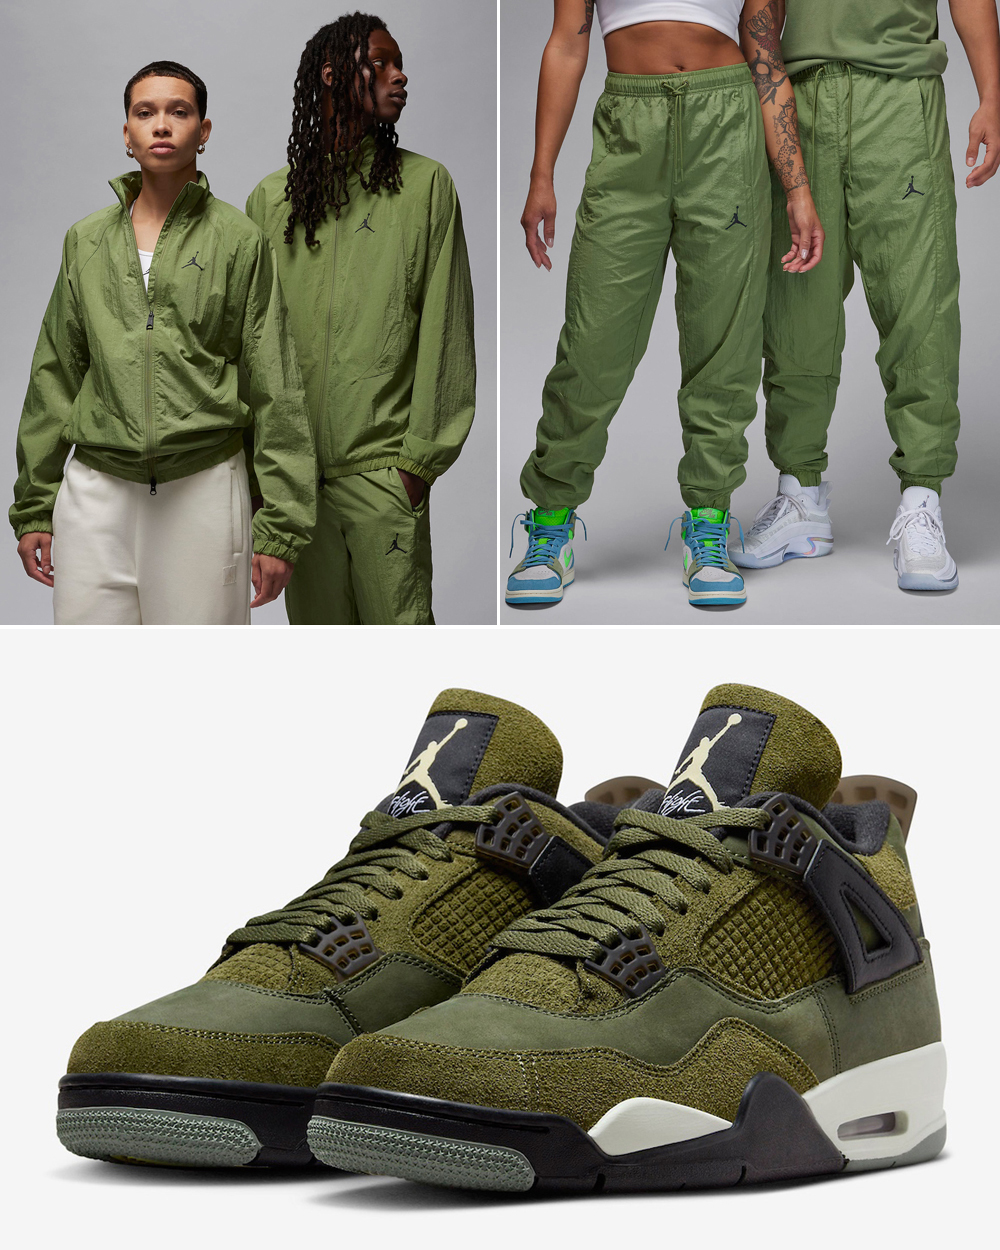 Air-Jordan-4-Craft-Olive-Jacket-Pants-Outfit